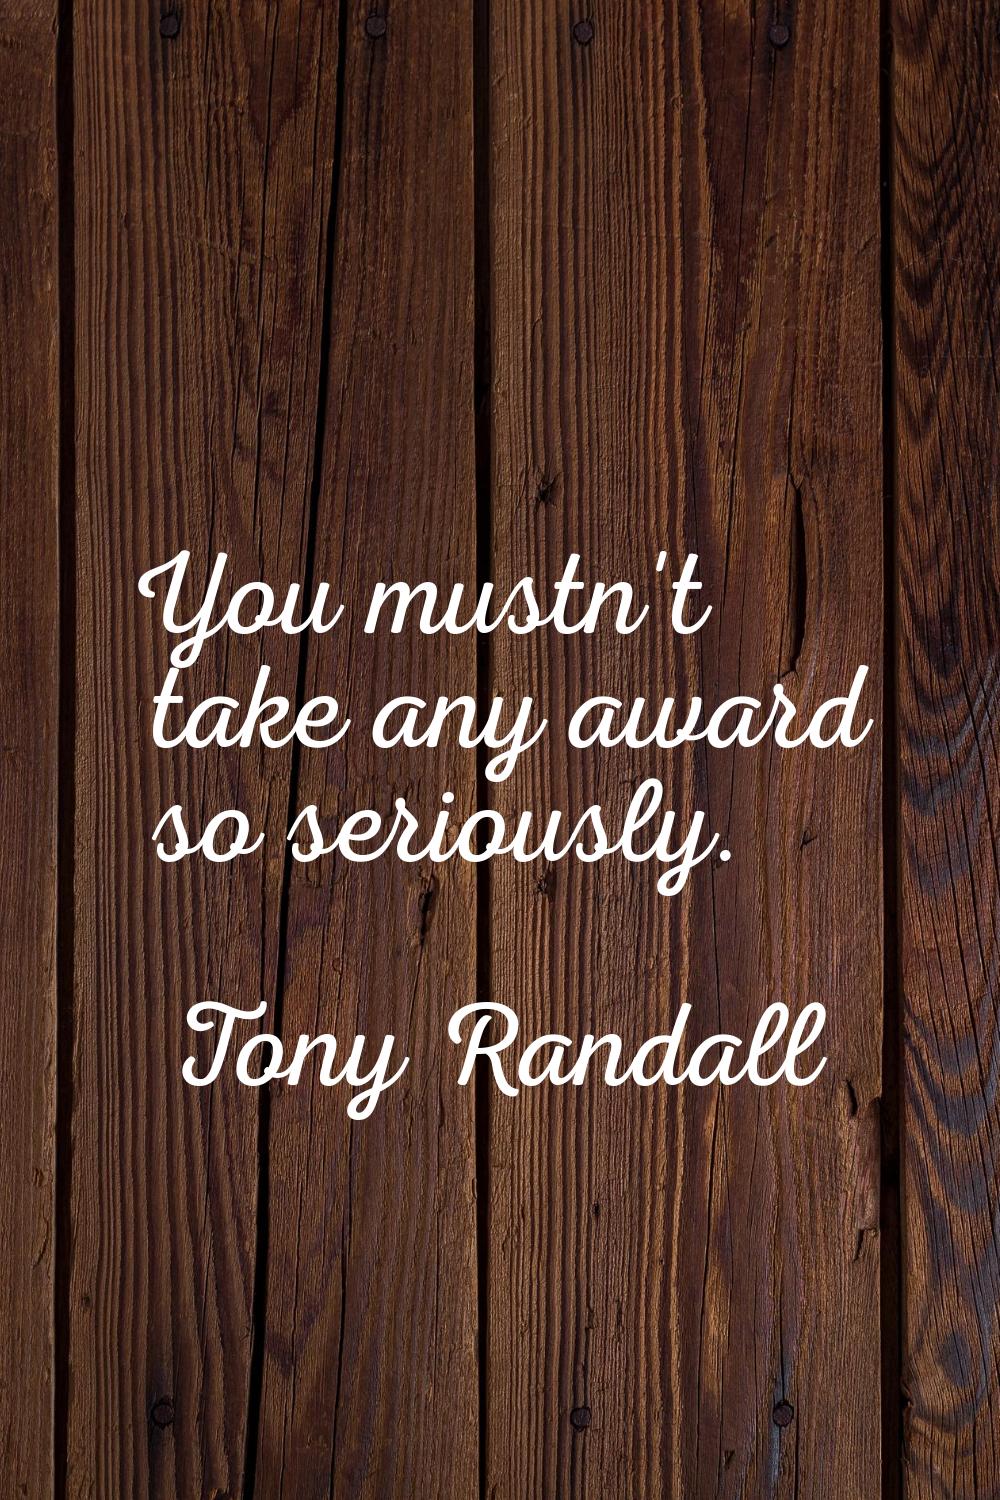 You mustn't take any award so seriously.